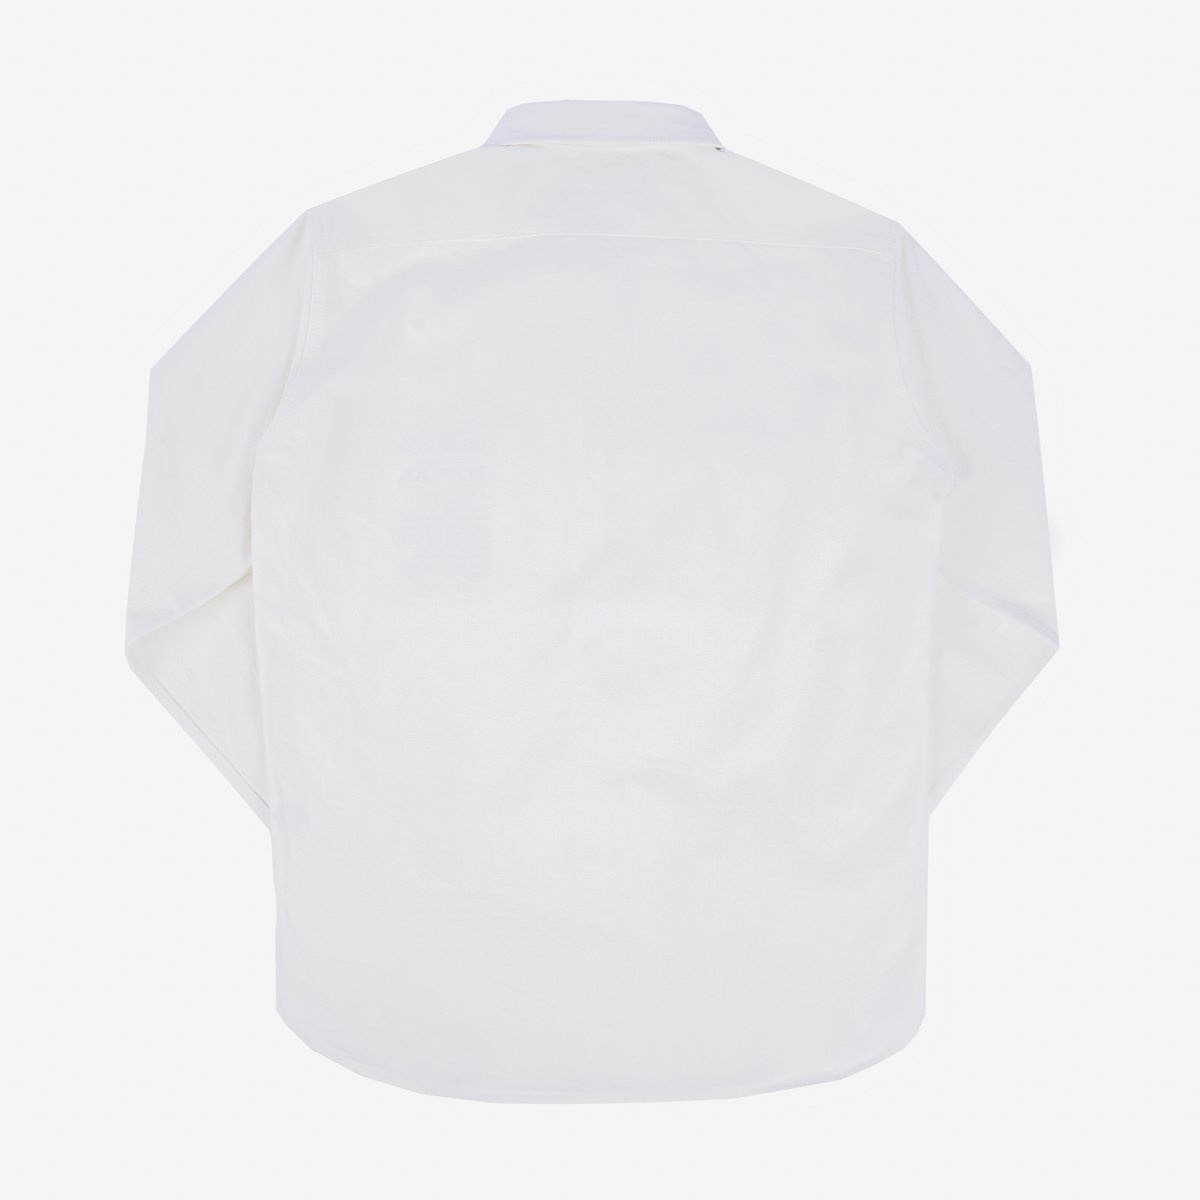 IHSH-391-WHT 13.5oz Denim Work Shirt - White - 6